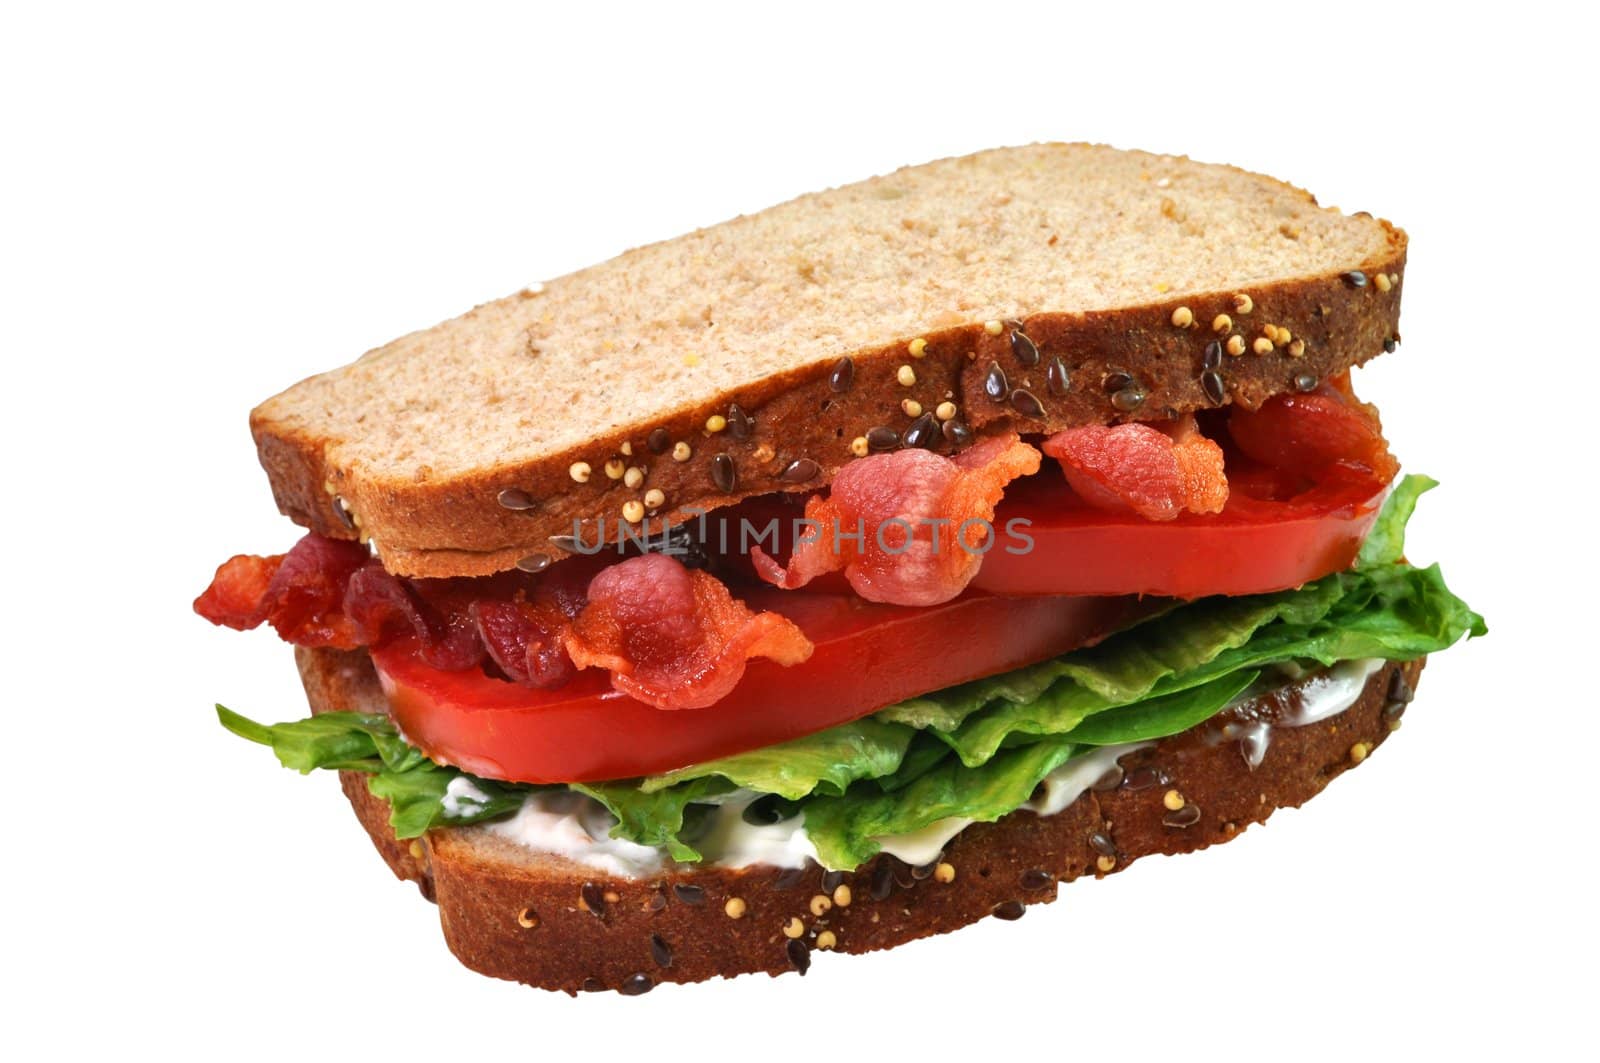 Bacon, Lettuce, and Tomato Sandwich by dehooks